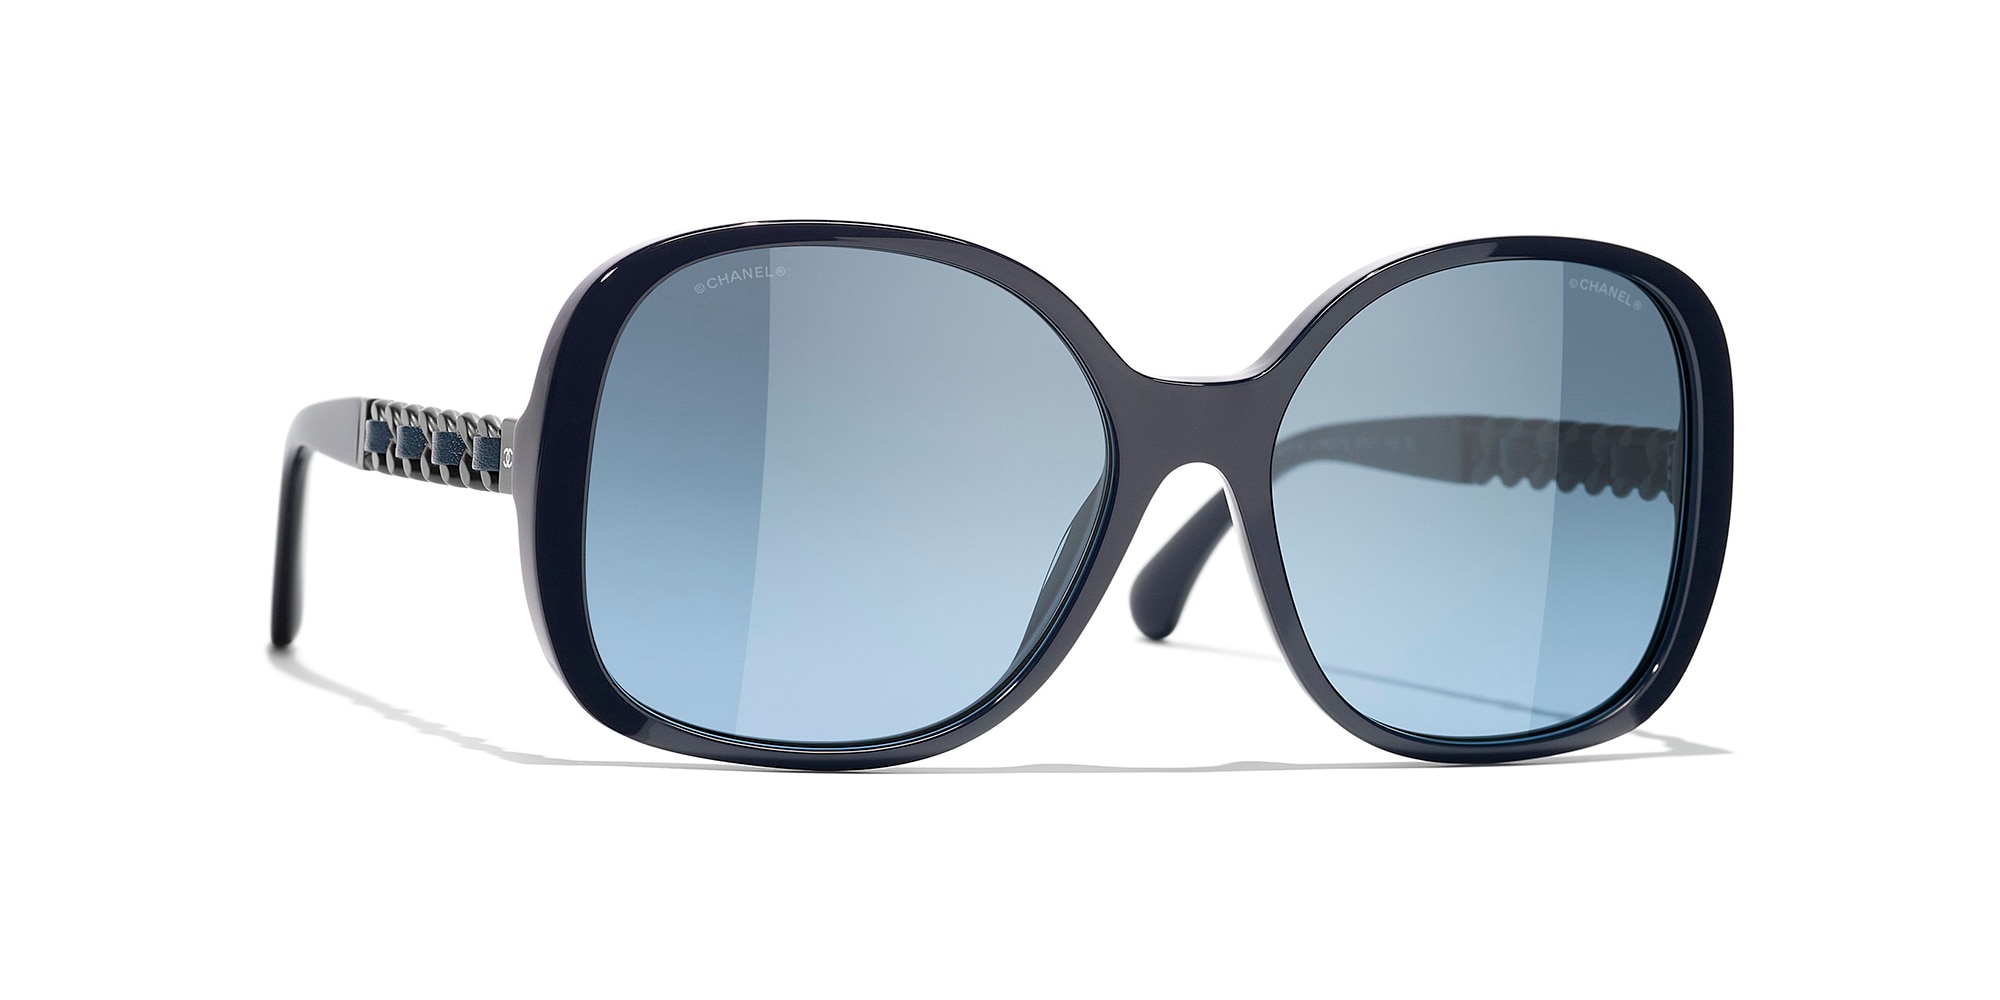 Chanel Oval Sunglasses CH5486 56 Grey  Black  White Polarised Sunglasses   Sunglass Hut New Zealand